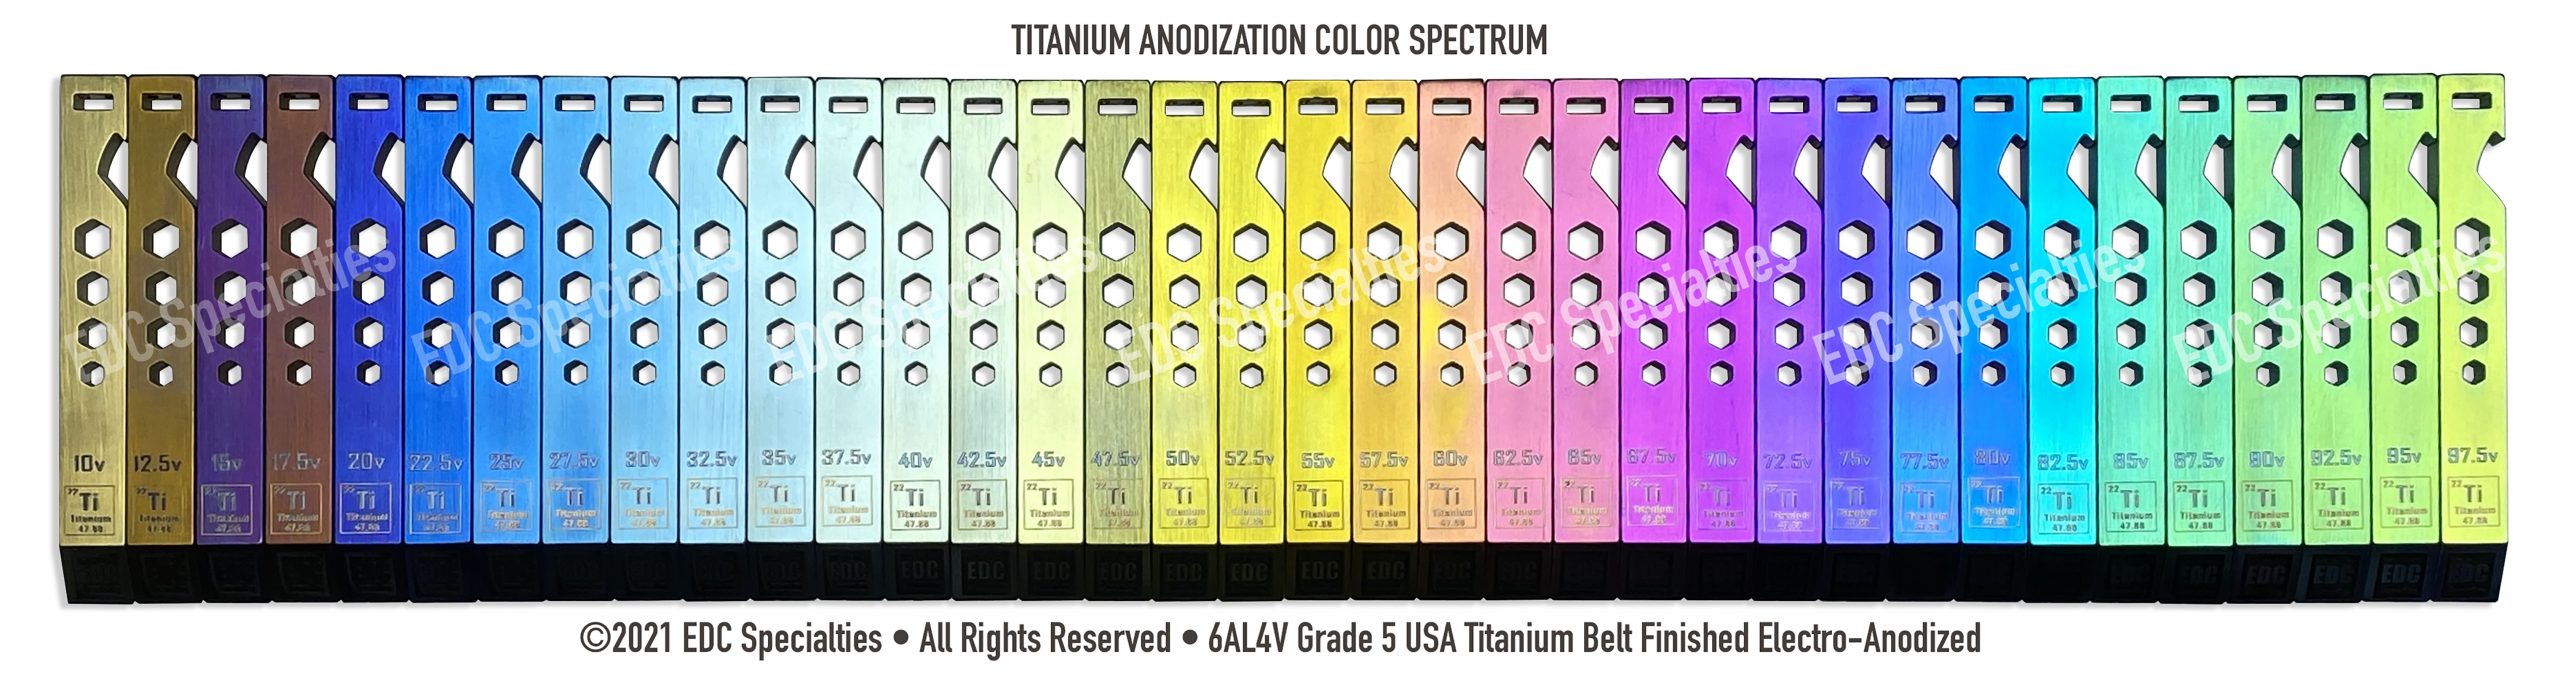 Titanium-Anodization-Chart-copy-2-scaled.jpg